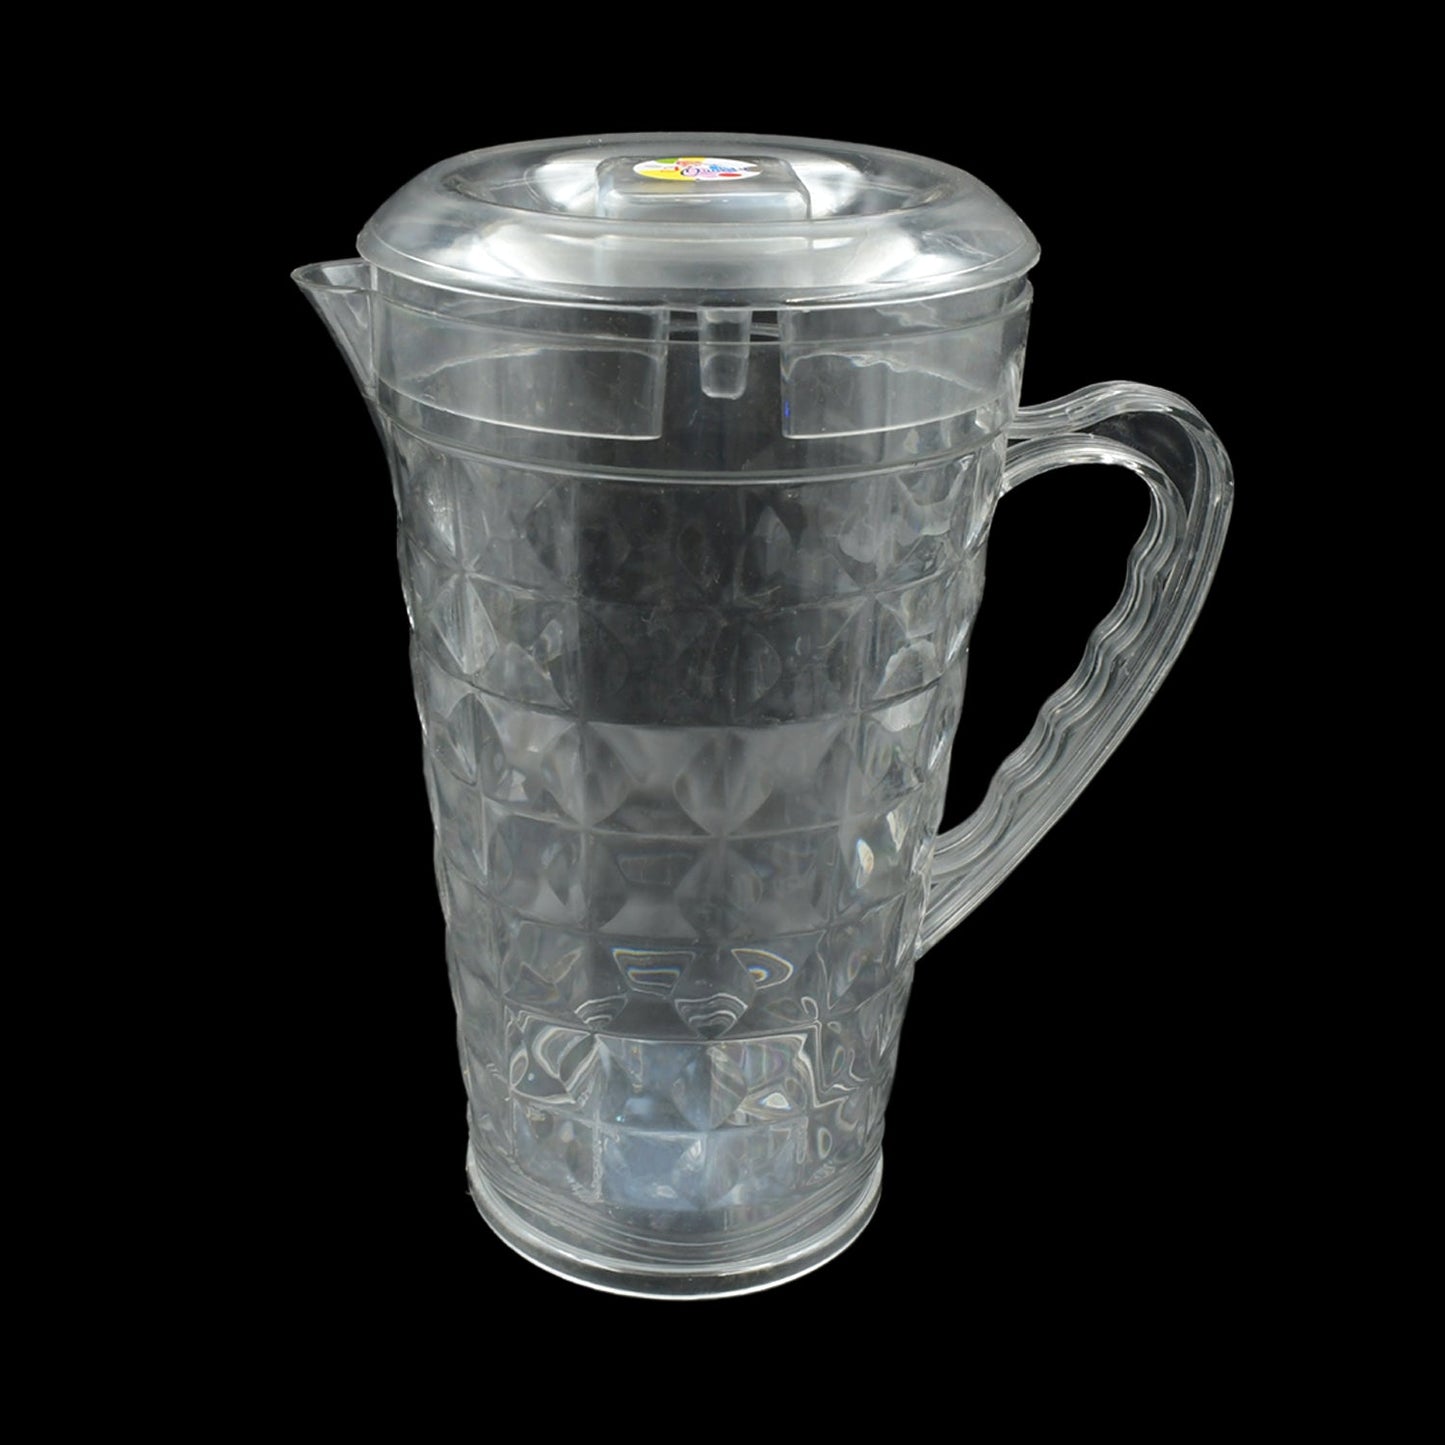 3692  Mocktail Pet Jug  Plastic Jug With lid, Drinking Beverage Jag, Transparent Tableware  Reusable BPA Free, Plastic Water jug for Home use, Perfect for Home, Restaurants